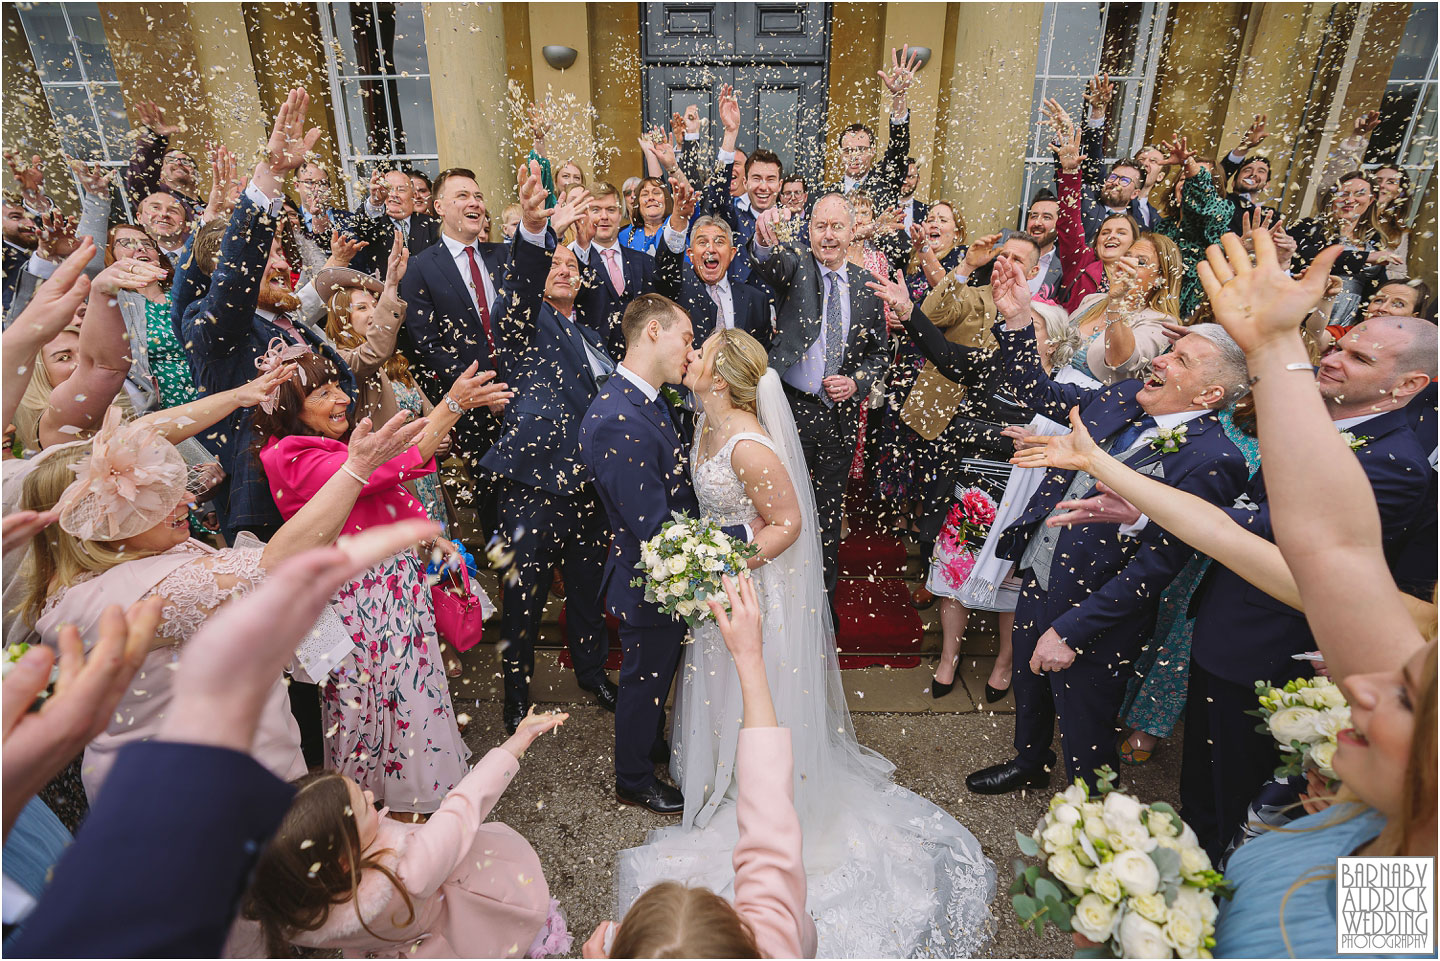 Confetti wedding photo at Rudding Park between Leeds and Harrogate by Yorkshire wedding photographer Barnaby Aldrick